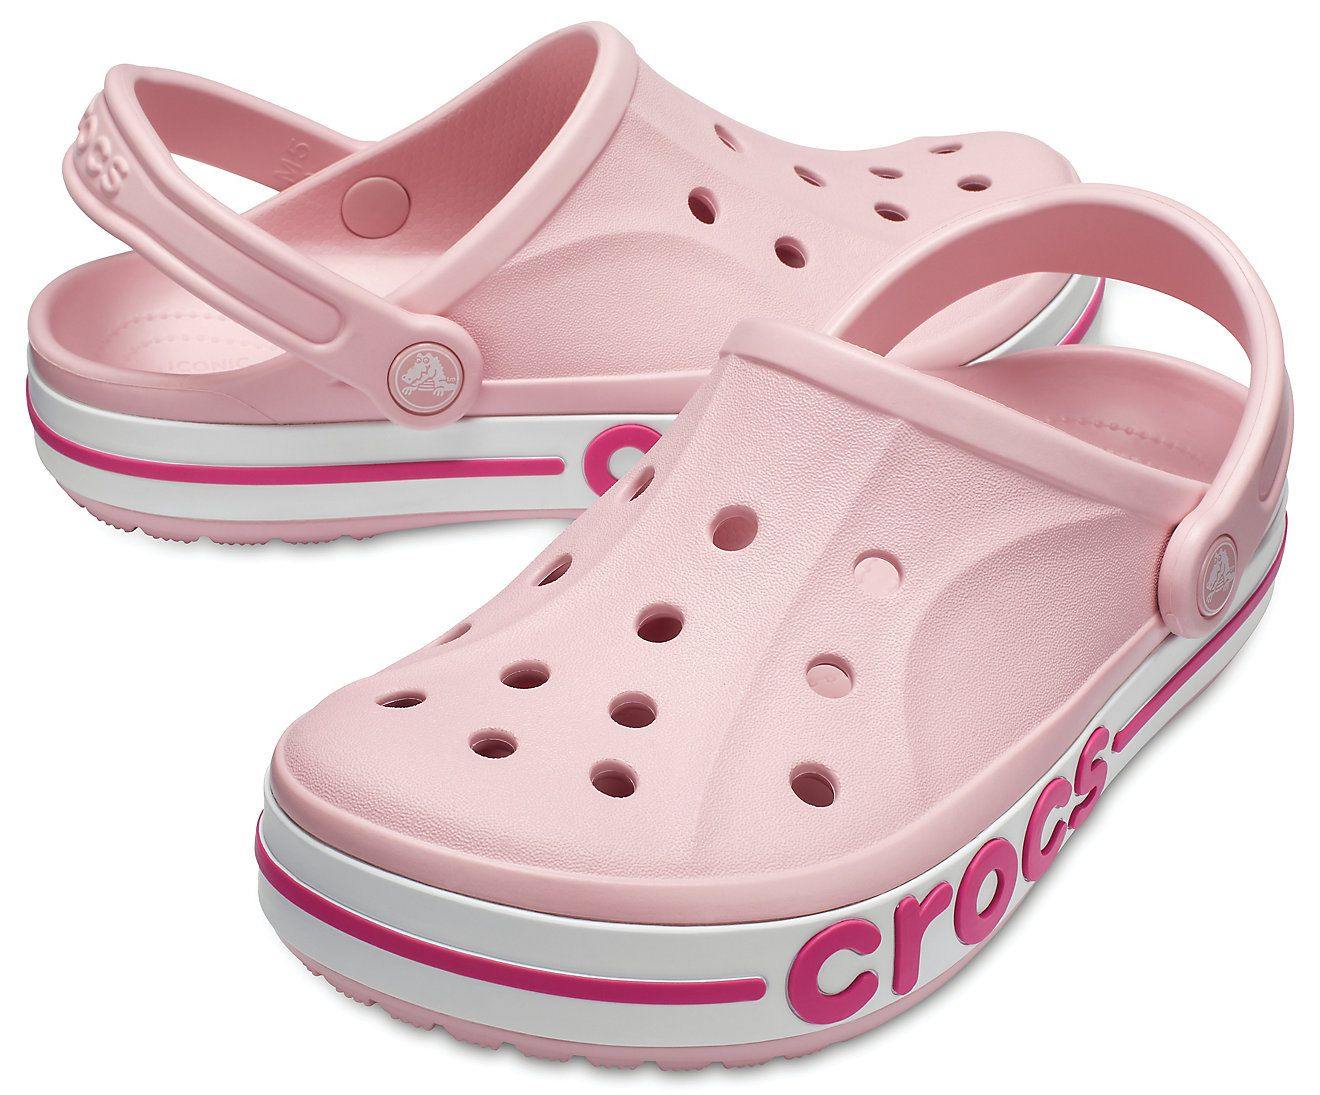 Authentic Crocs Bayaband Clog for Women 